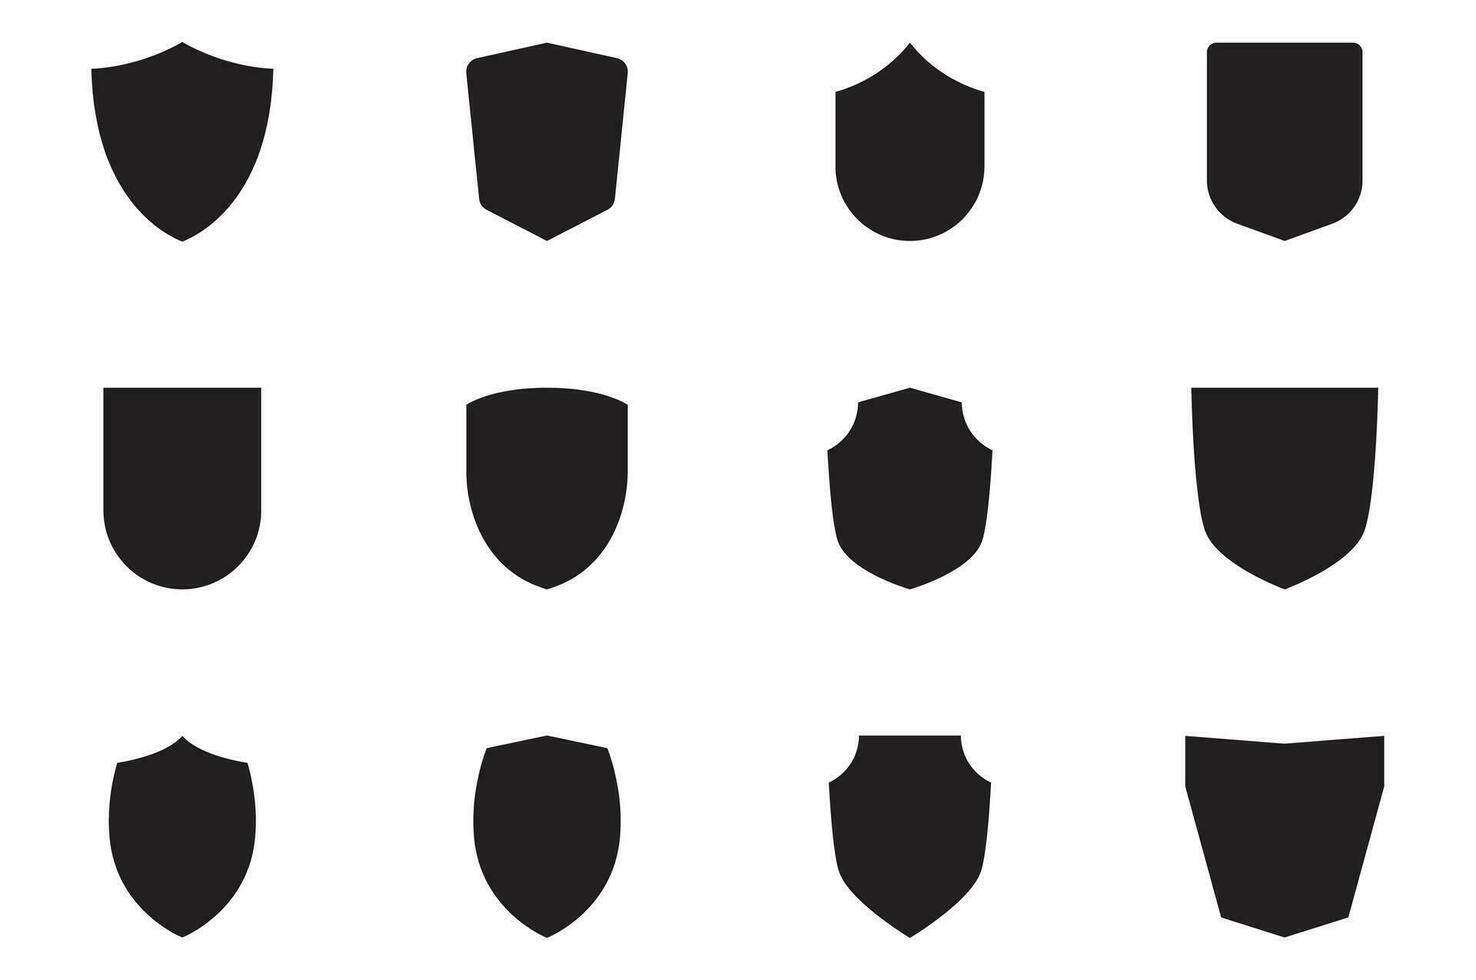 12 Shield shape Vectors and Illustrations